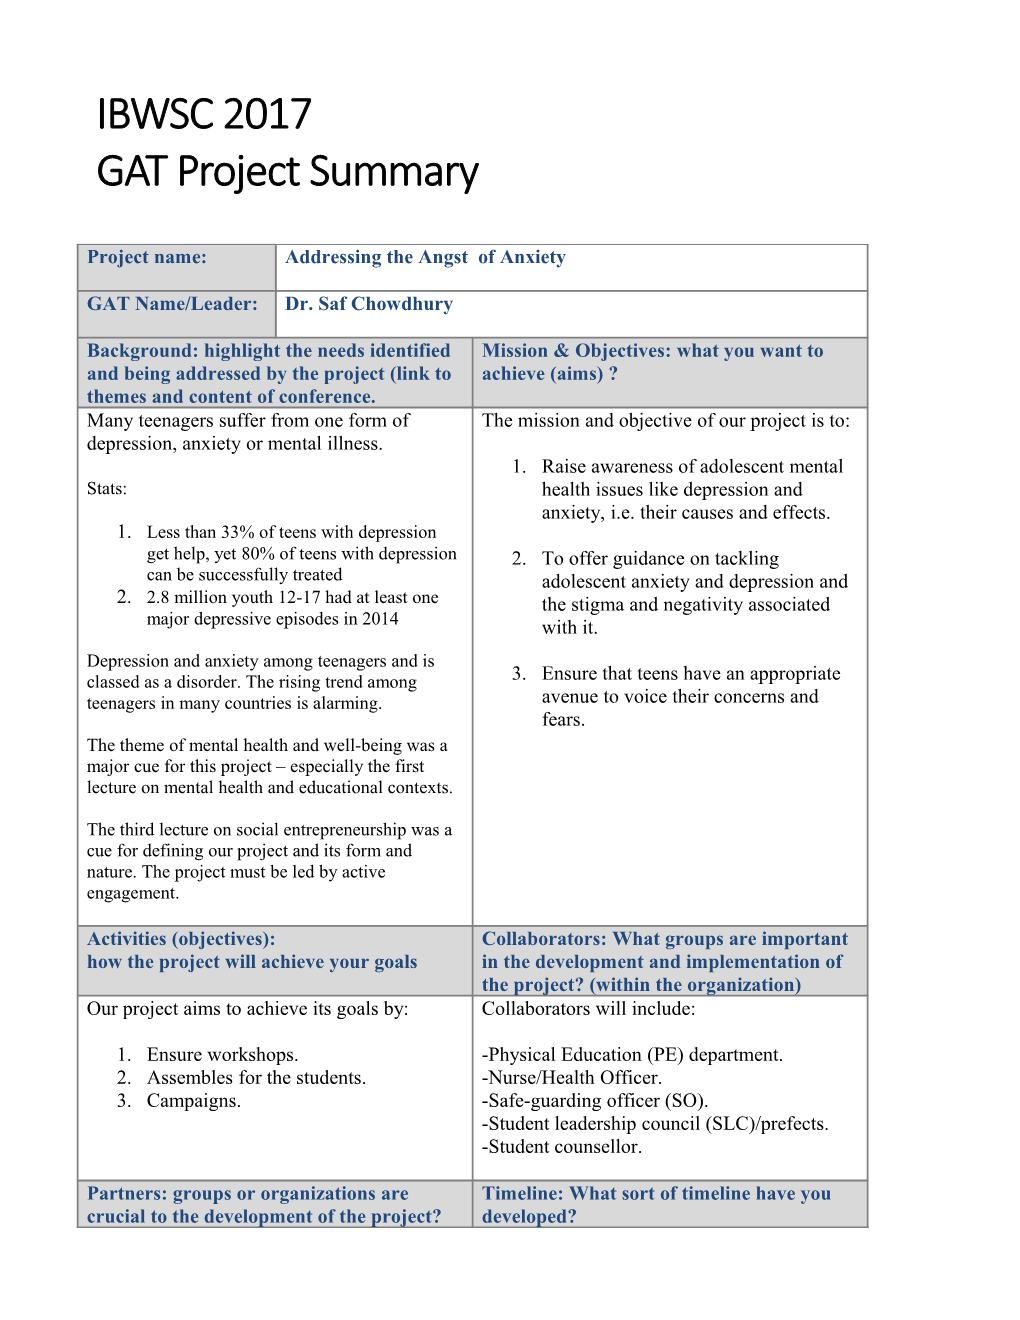 GAT Project Summary